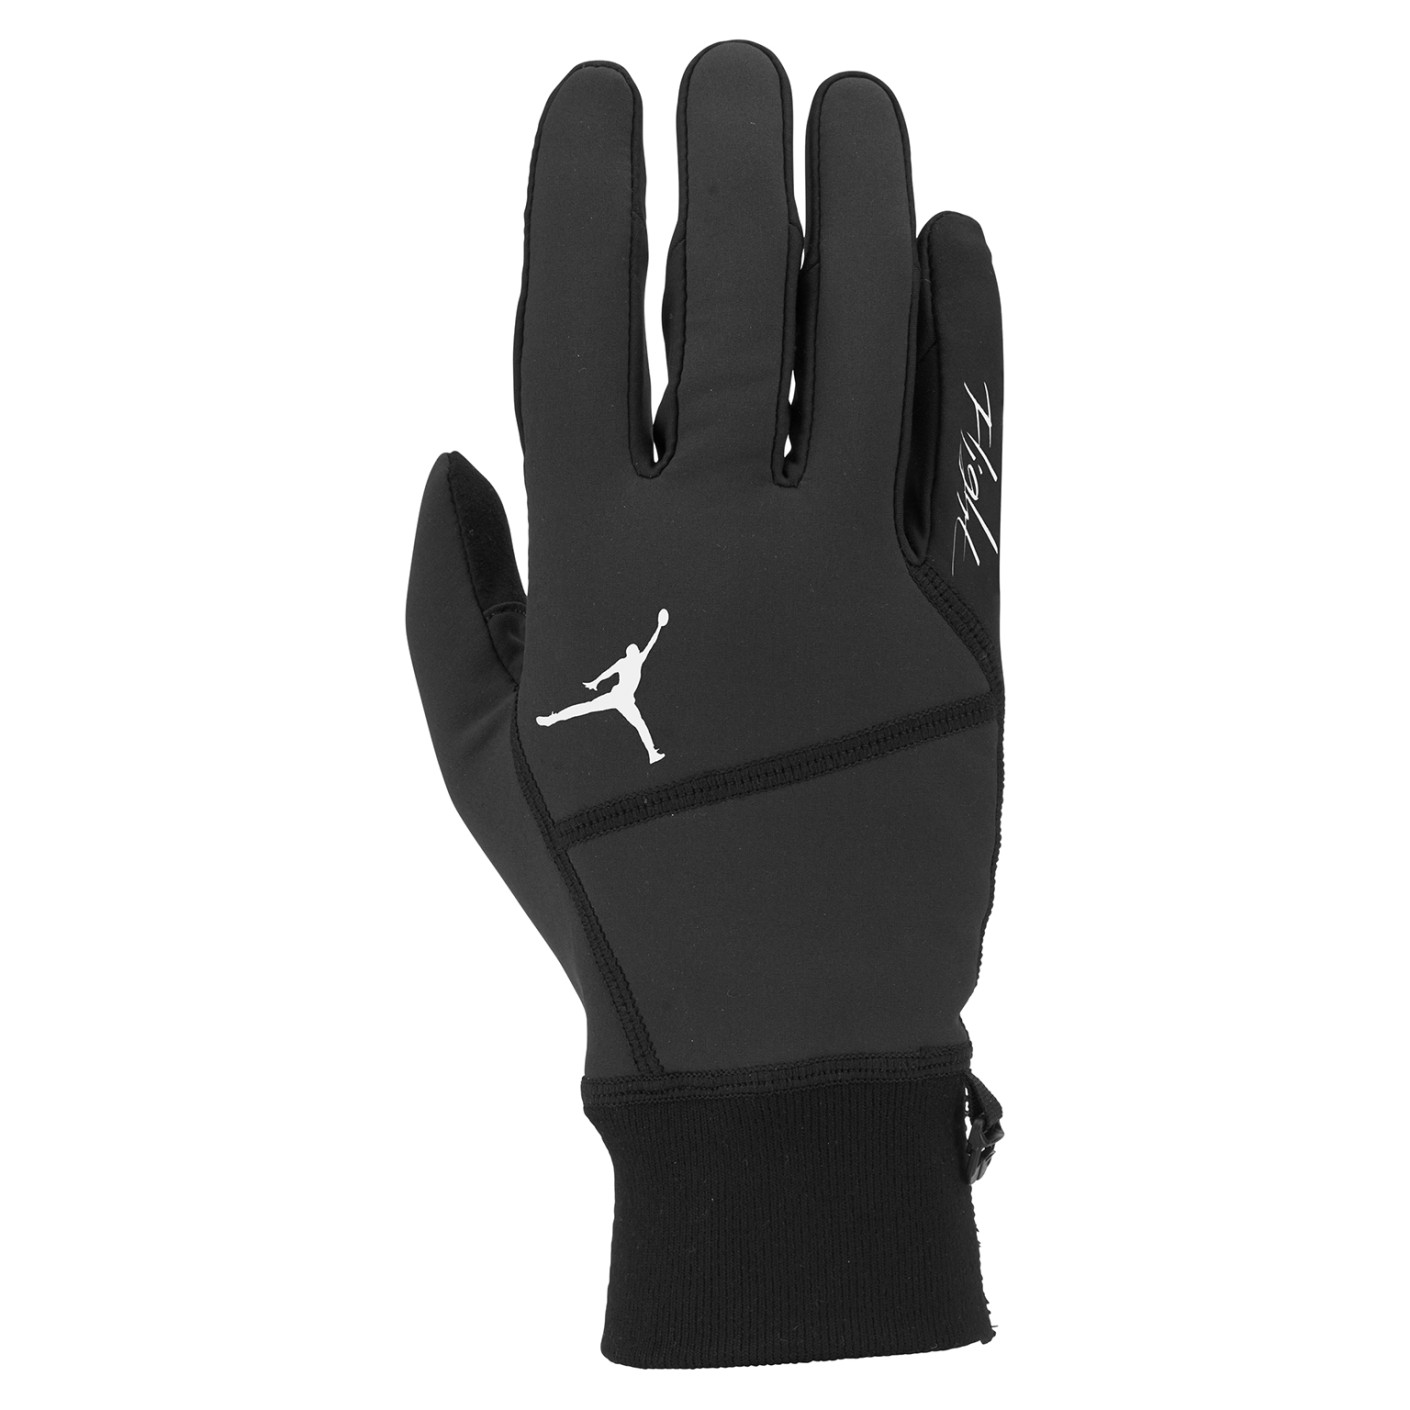 Gants Nike Jordan Hyperstorm Fleece Tech Gear gris foncé noir